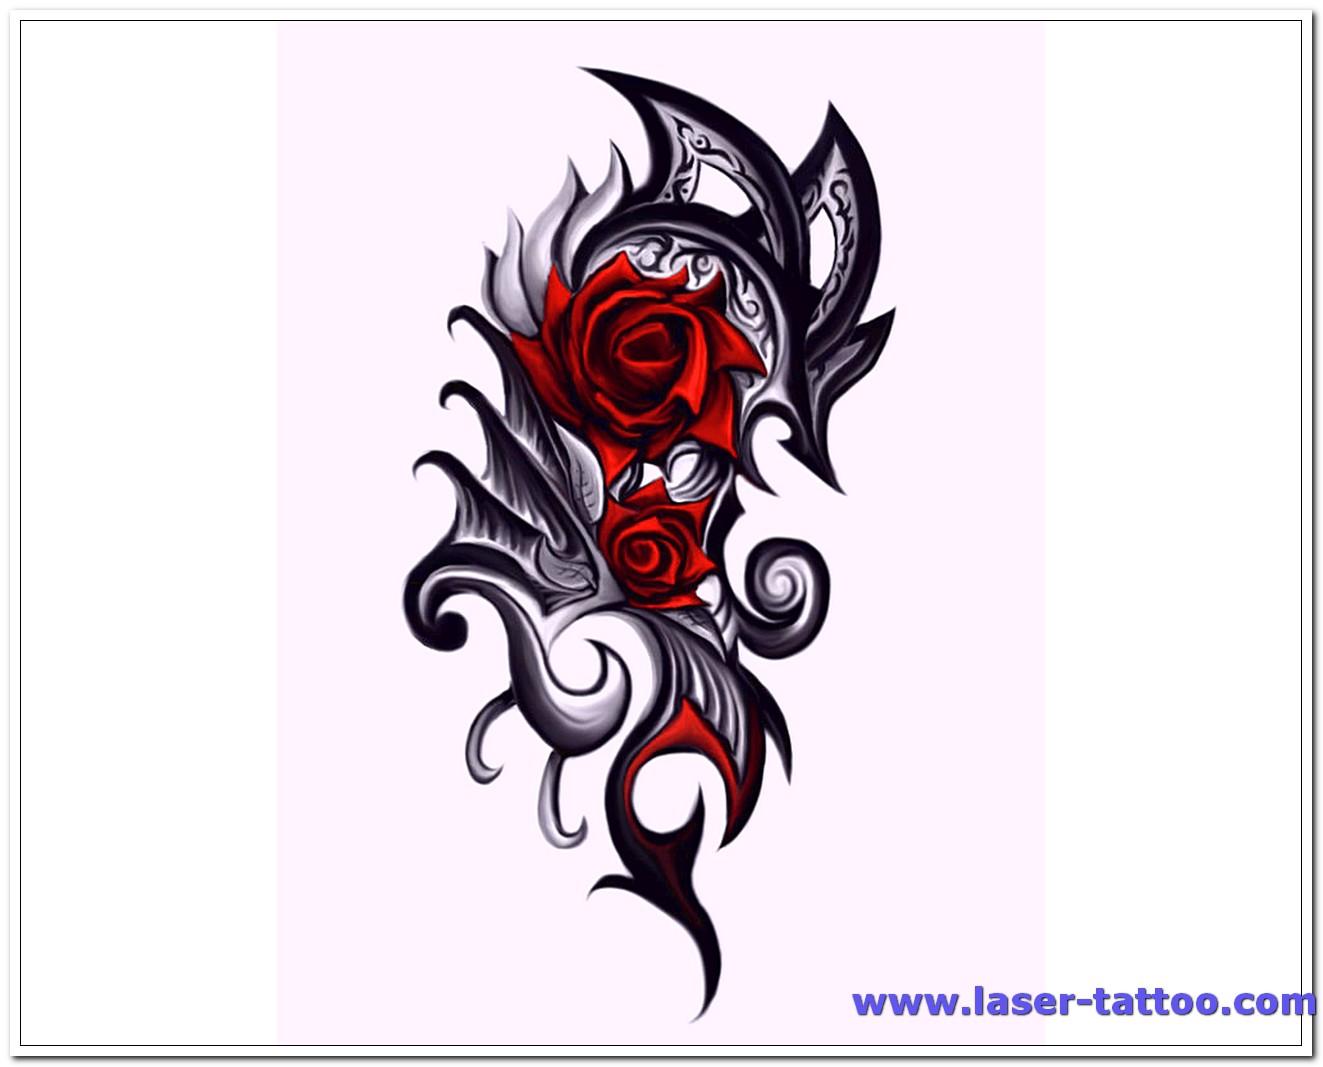 800+ Free Download Tattoo Design Background Idea Tattoo Photos